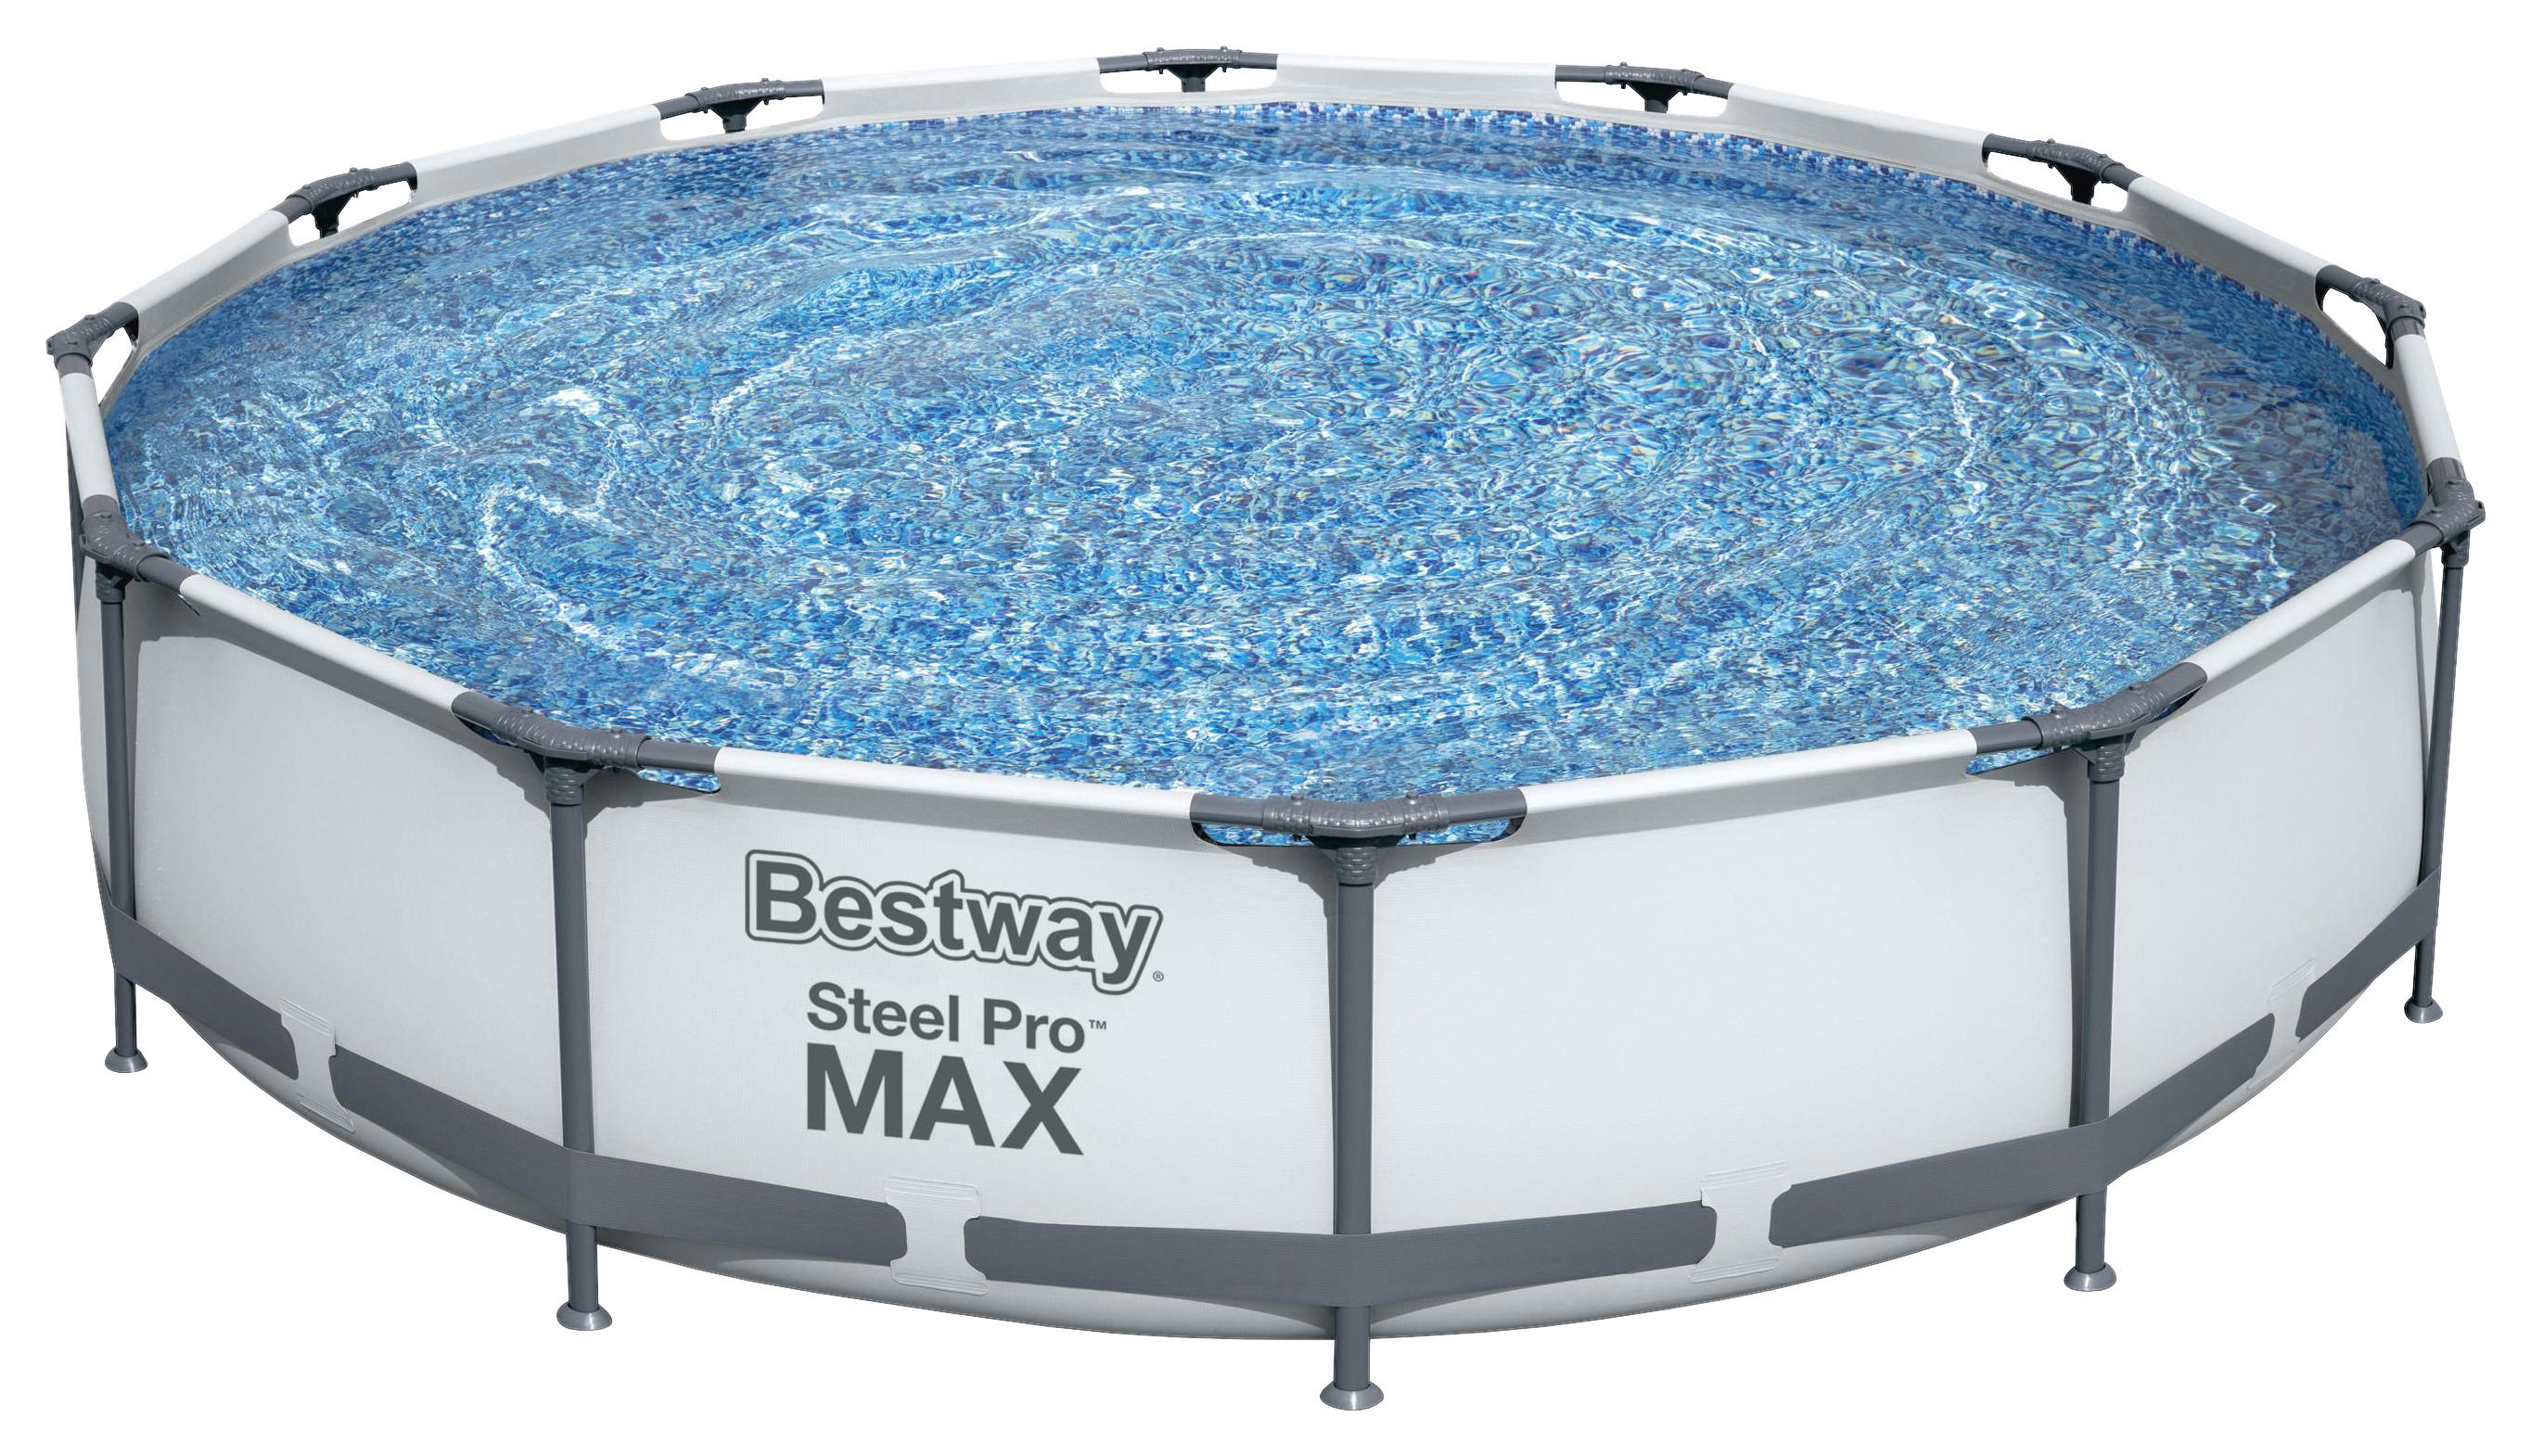 POOL SET STEEL PRO MAX 56416 - Blau/Weiß, Basics, Kunststoff/Metall (366/76cm) - Bestway